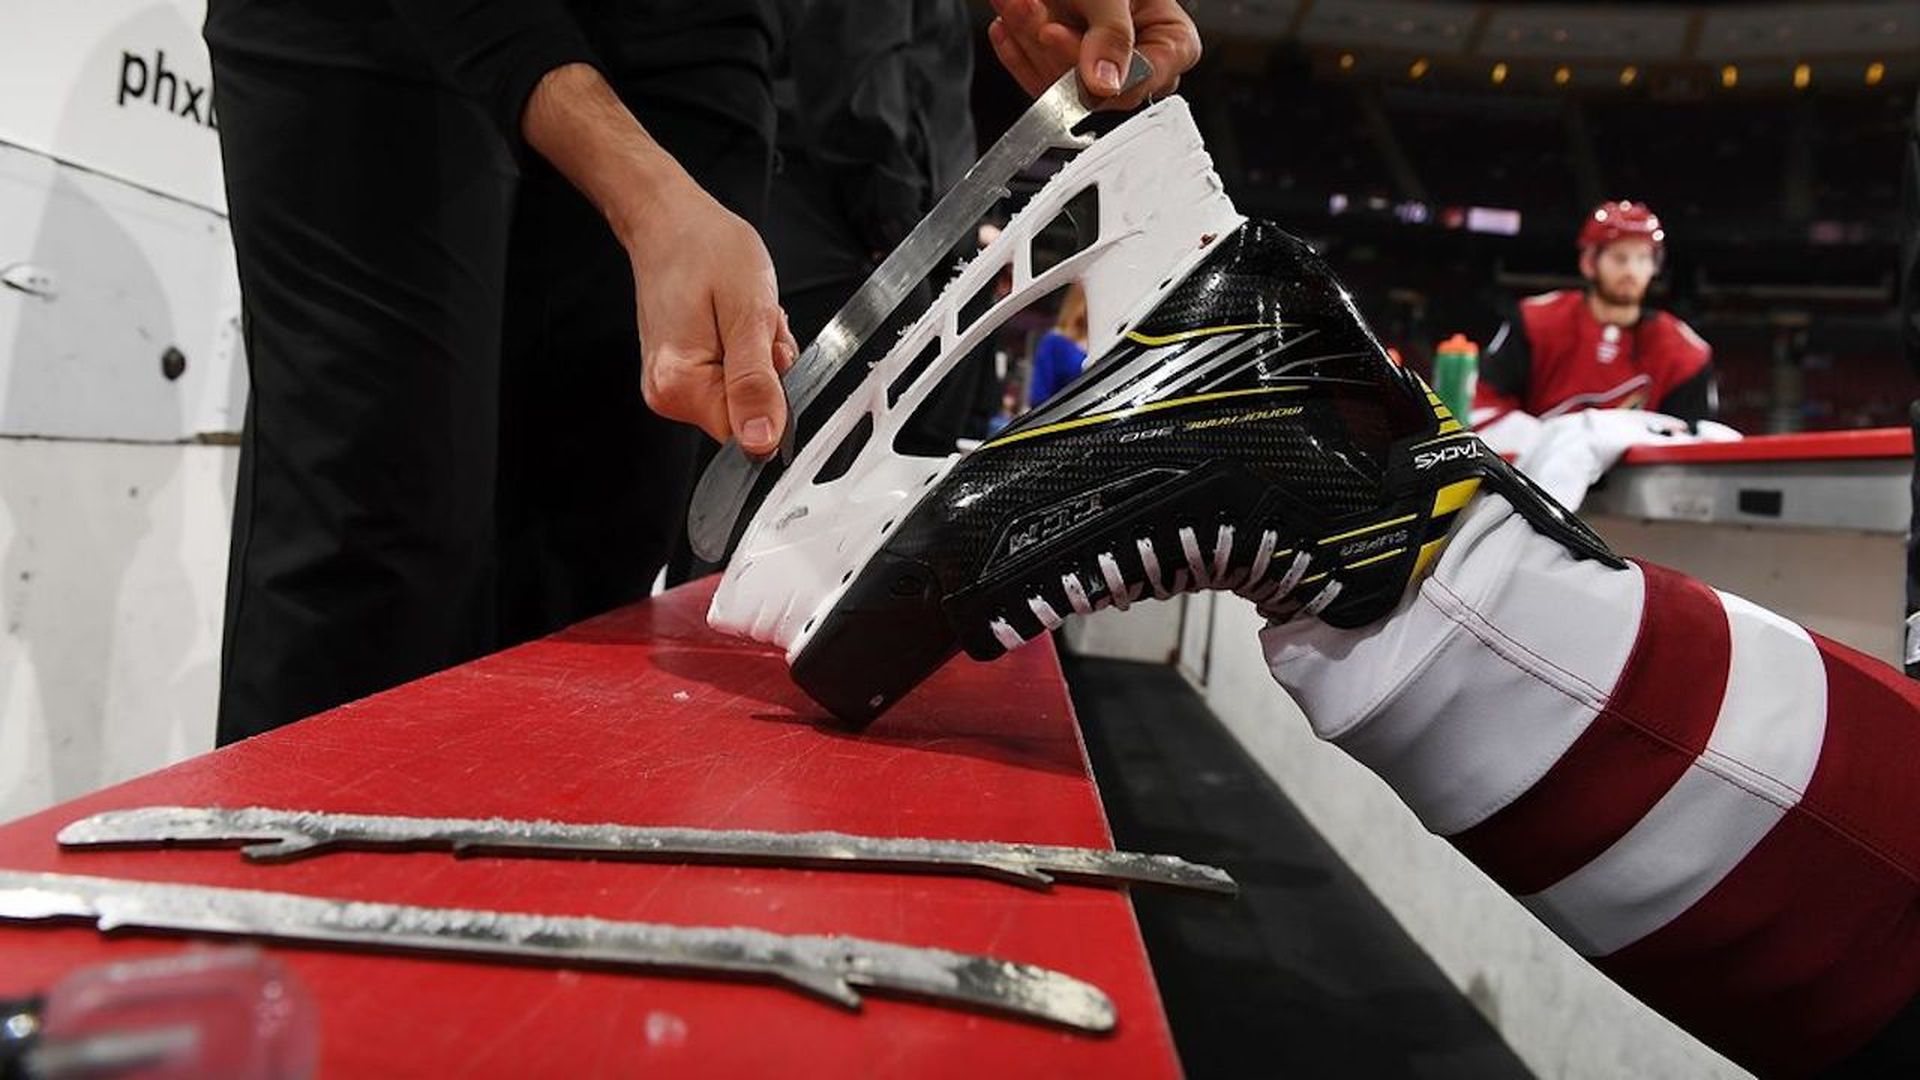 Someone sharpening a hockey blade